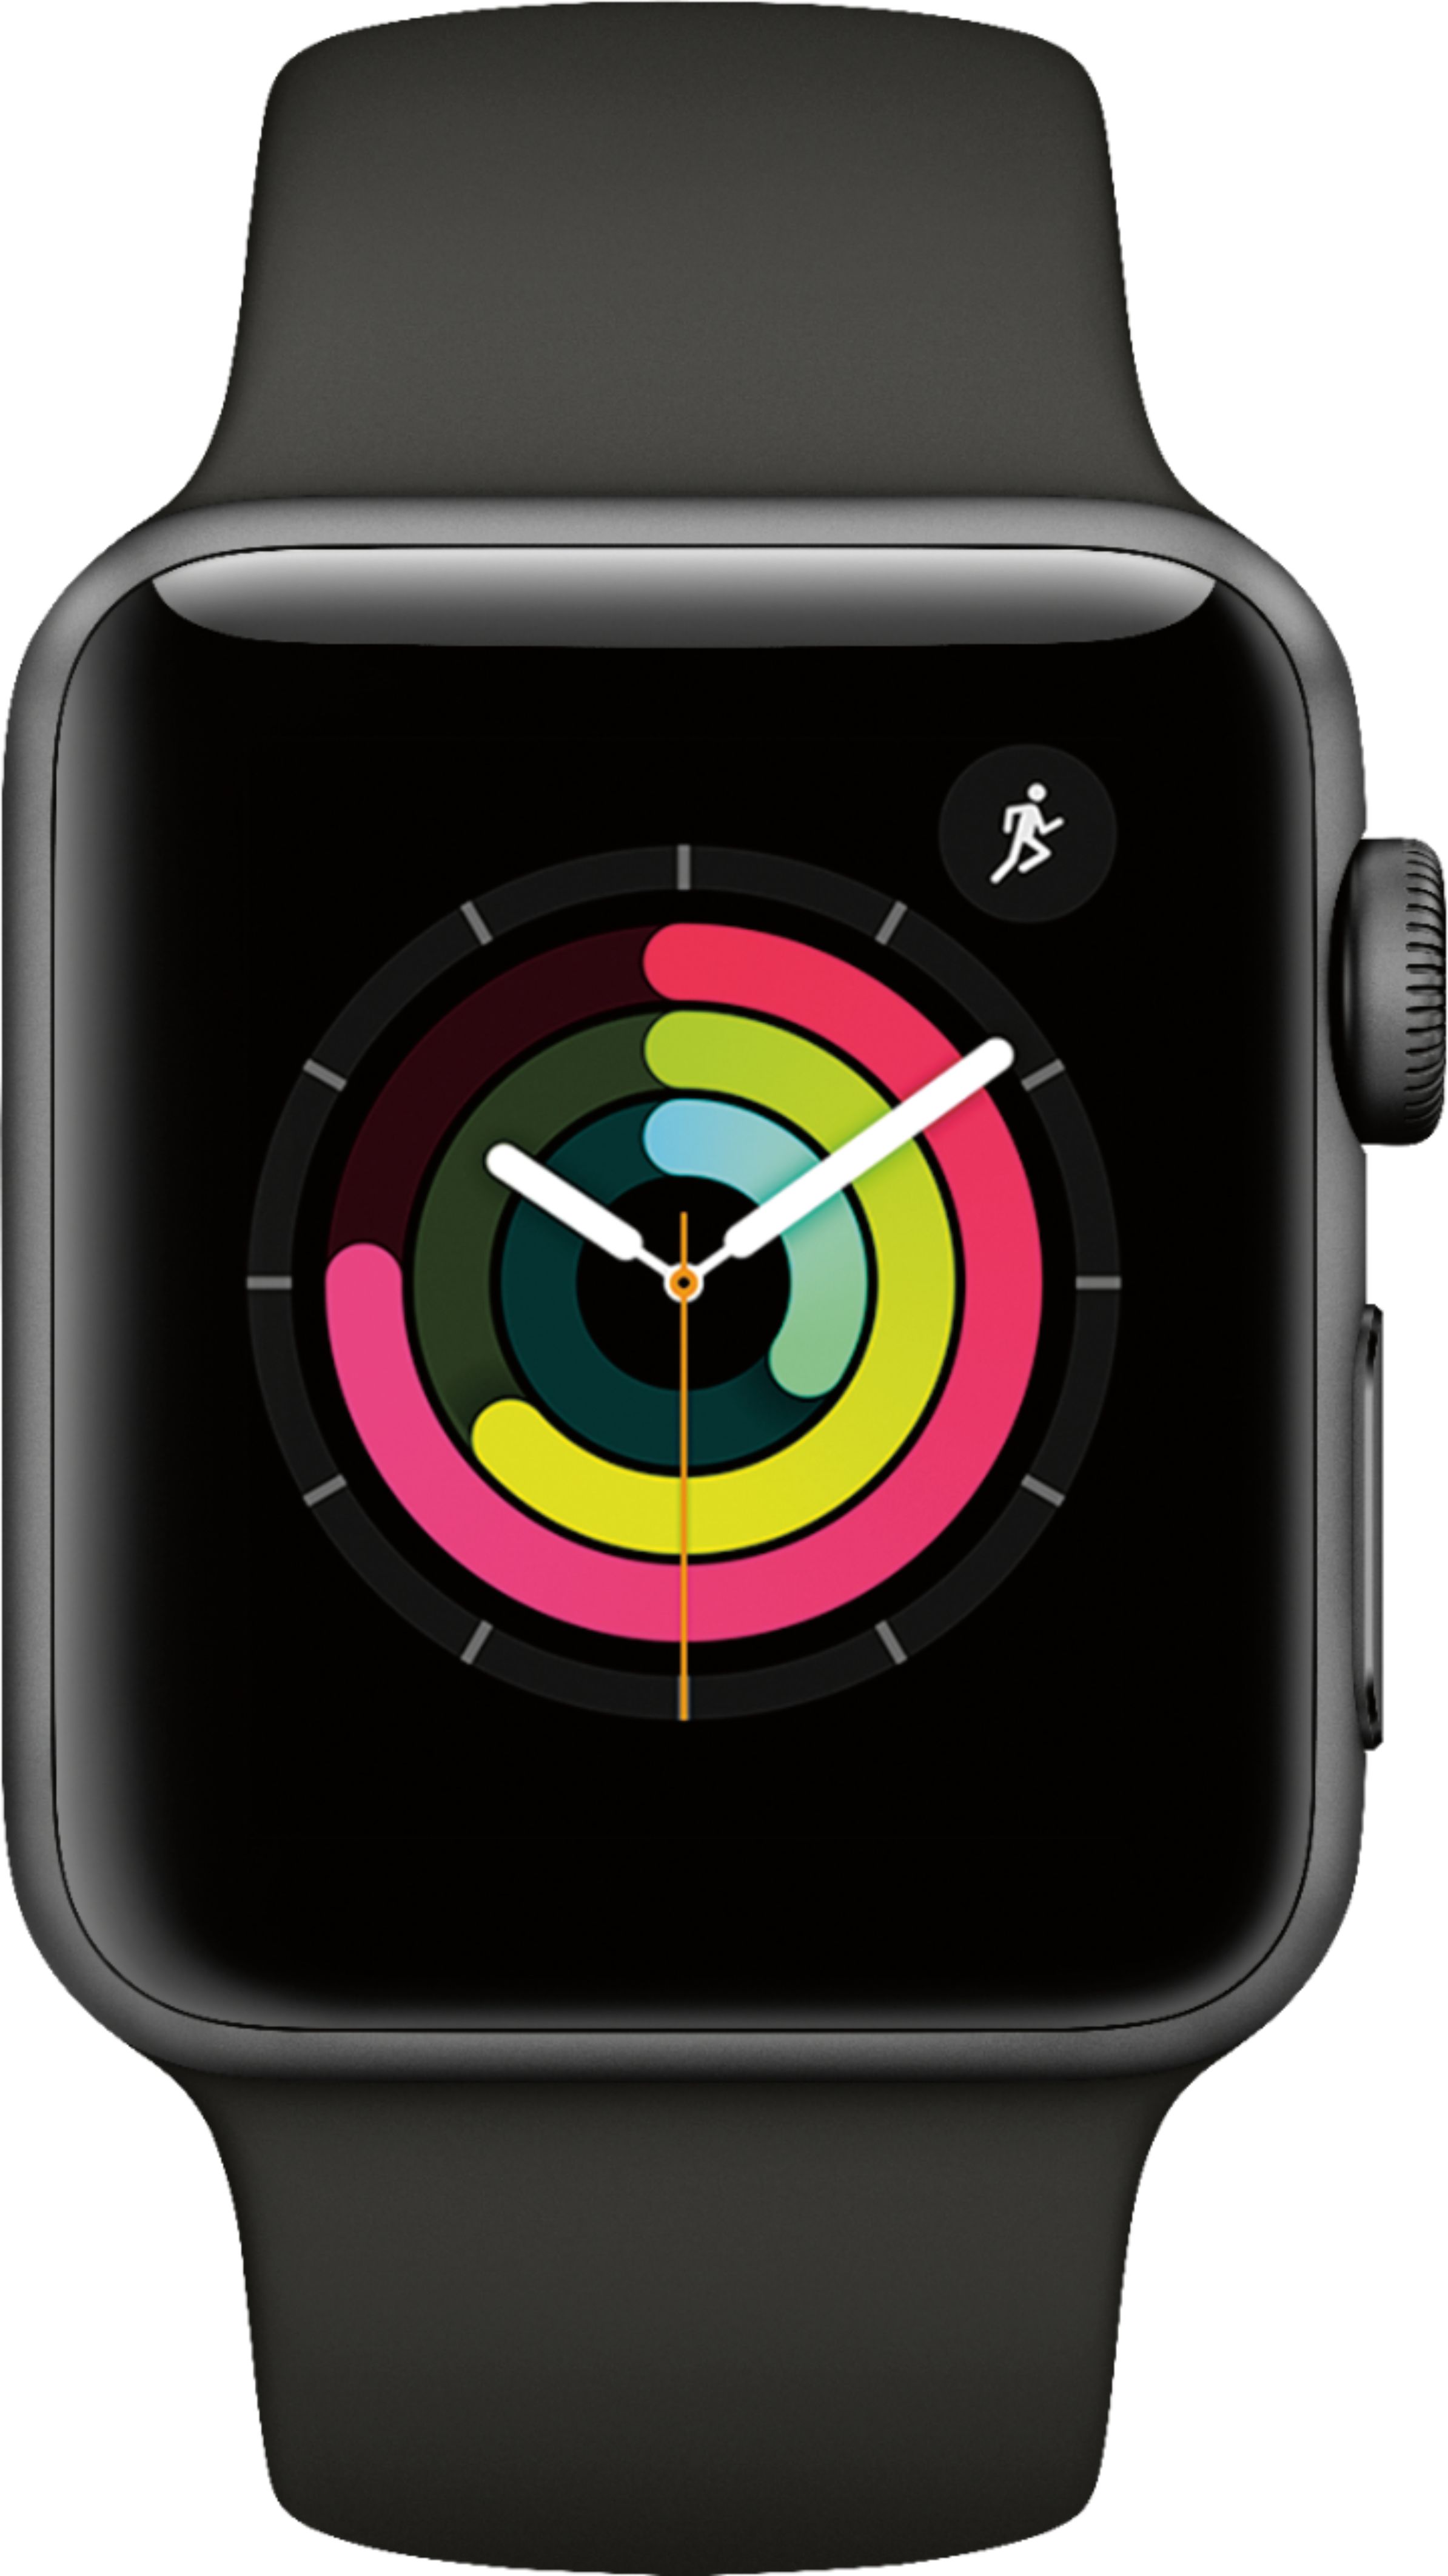 Customer Reviews: Apple Watch Series 3 (GPS), 38mm Space Gray Aluminum